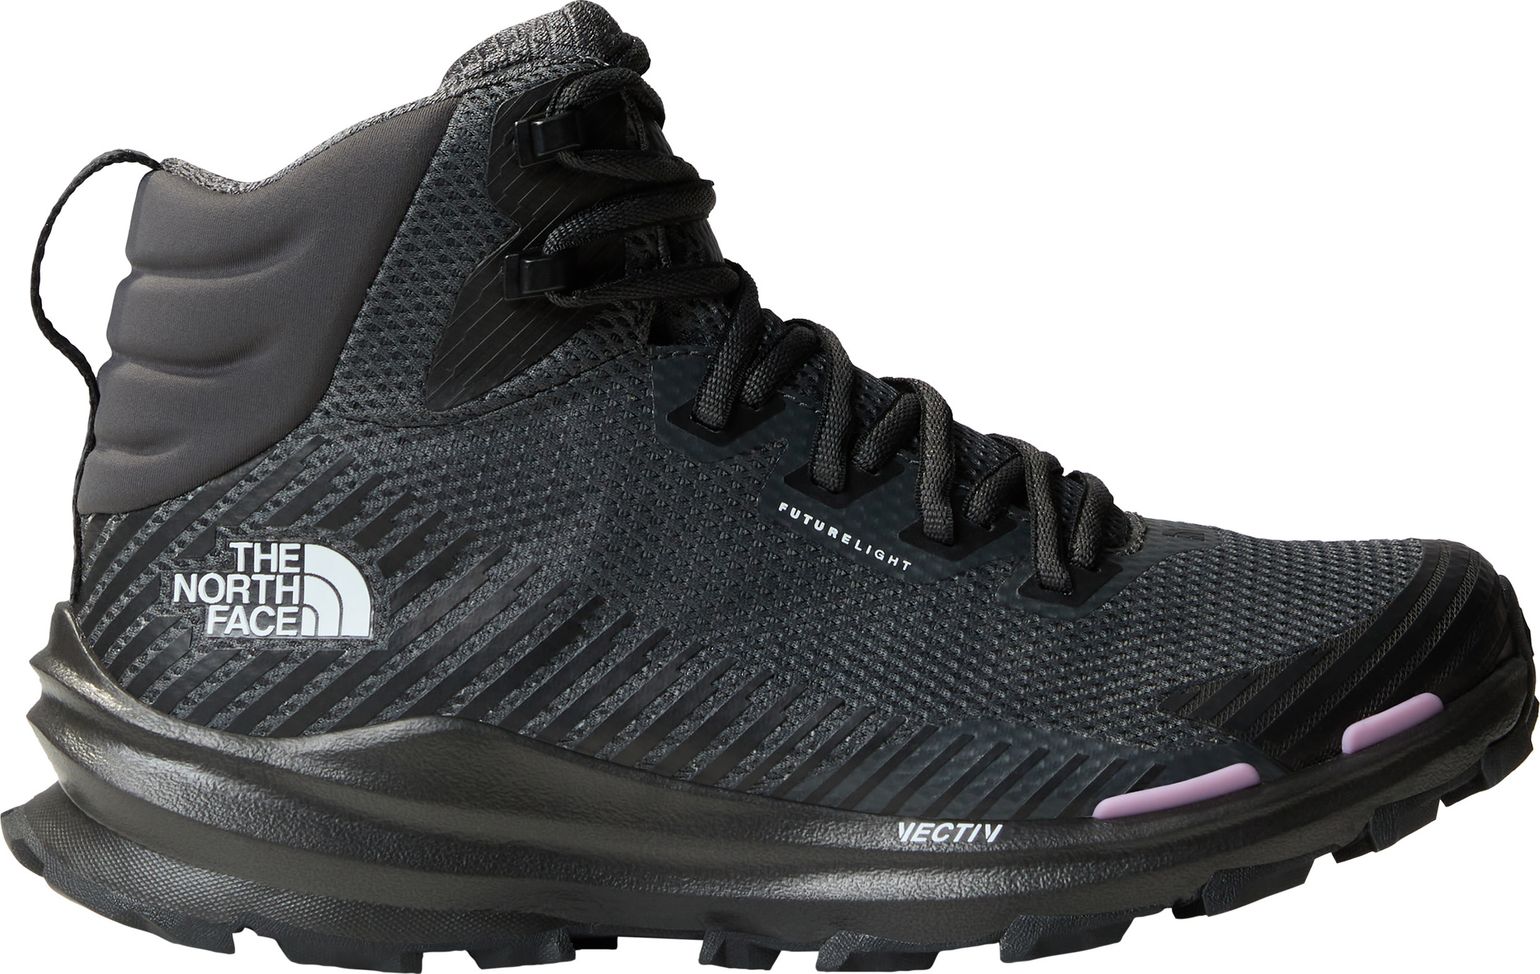 Women's Vectiv Fastpack Futurelight Hiking Boots Tnf Black/Asphalt Grey